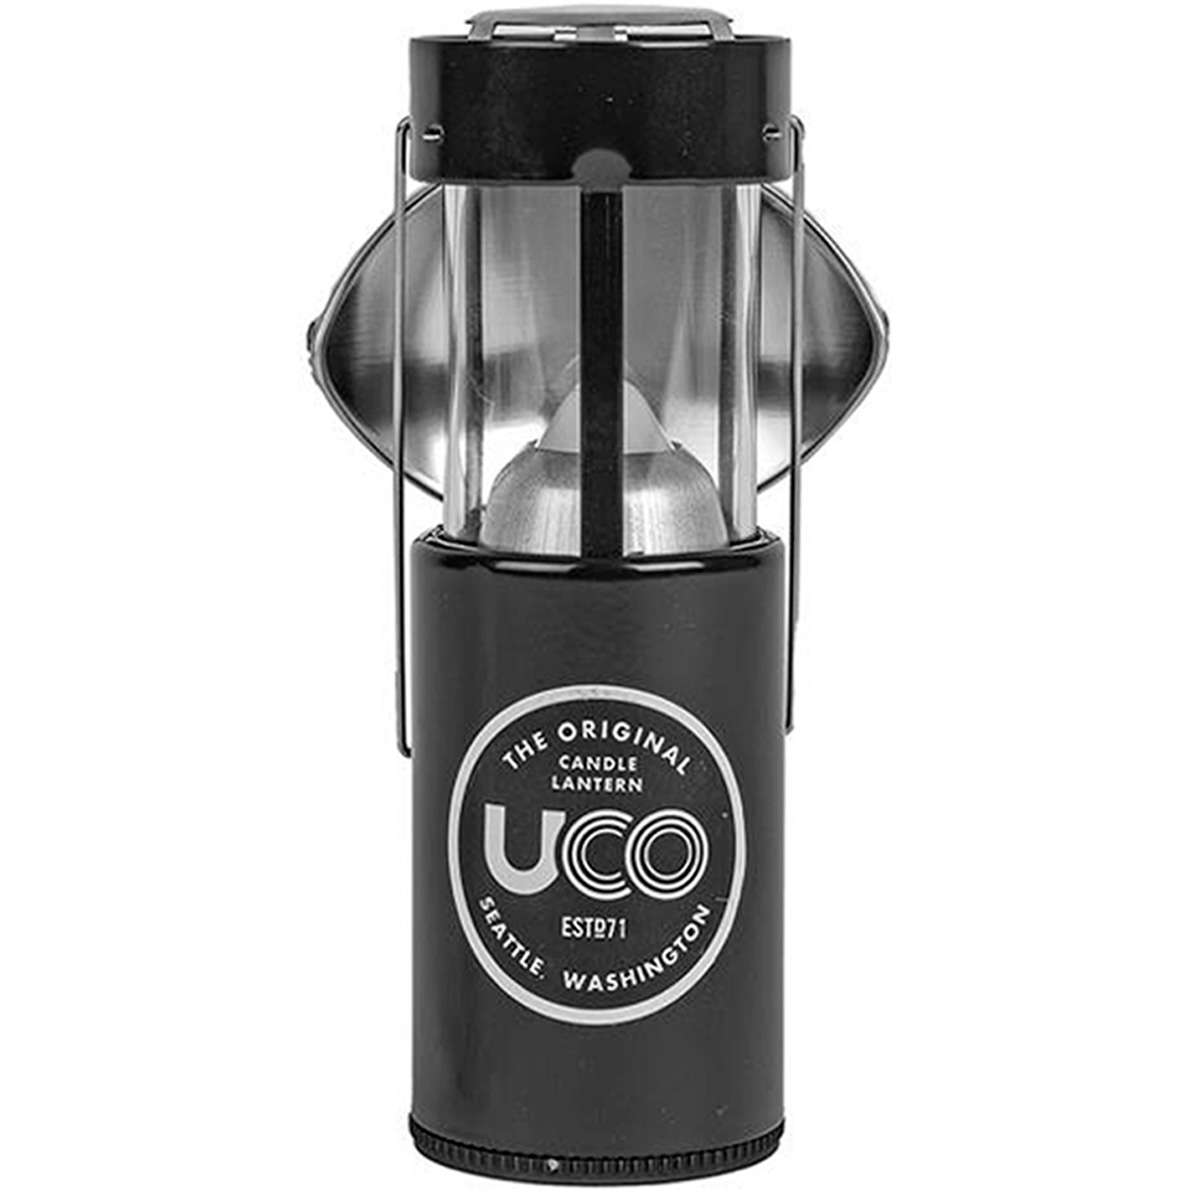 Uco Original Candle Lantern Kit 2 0 Survival Supplies Australia